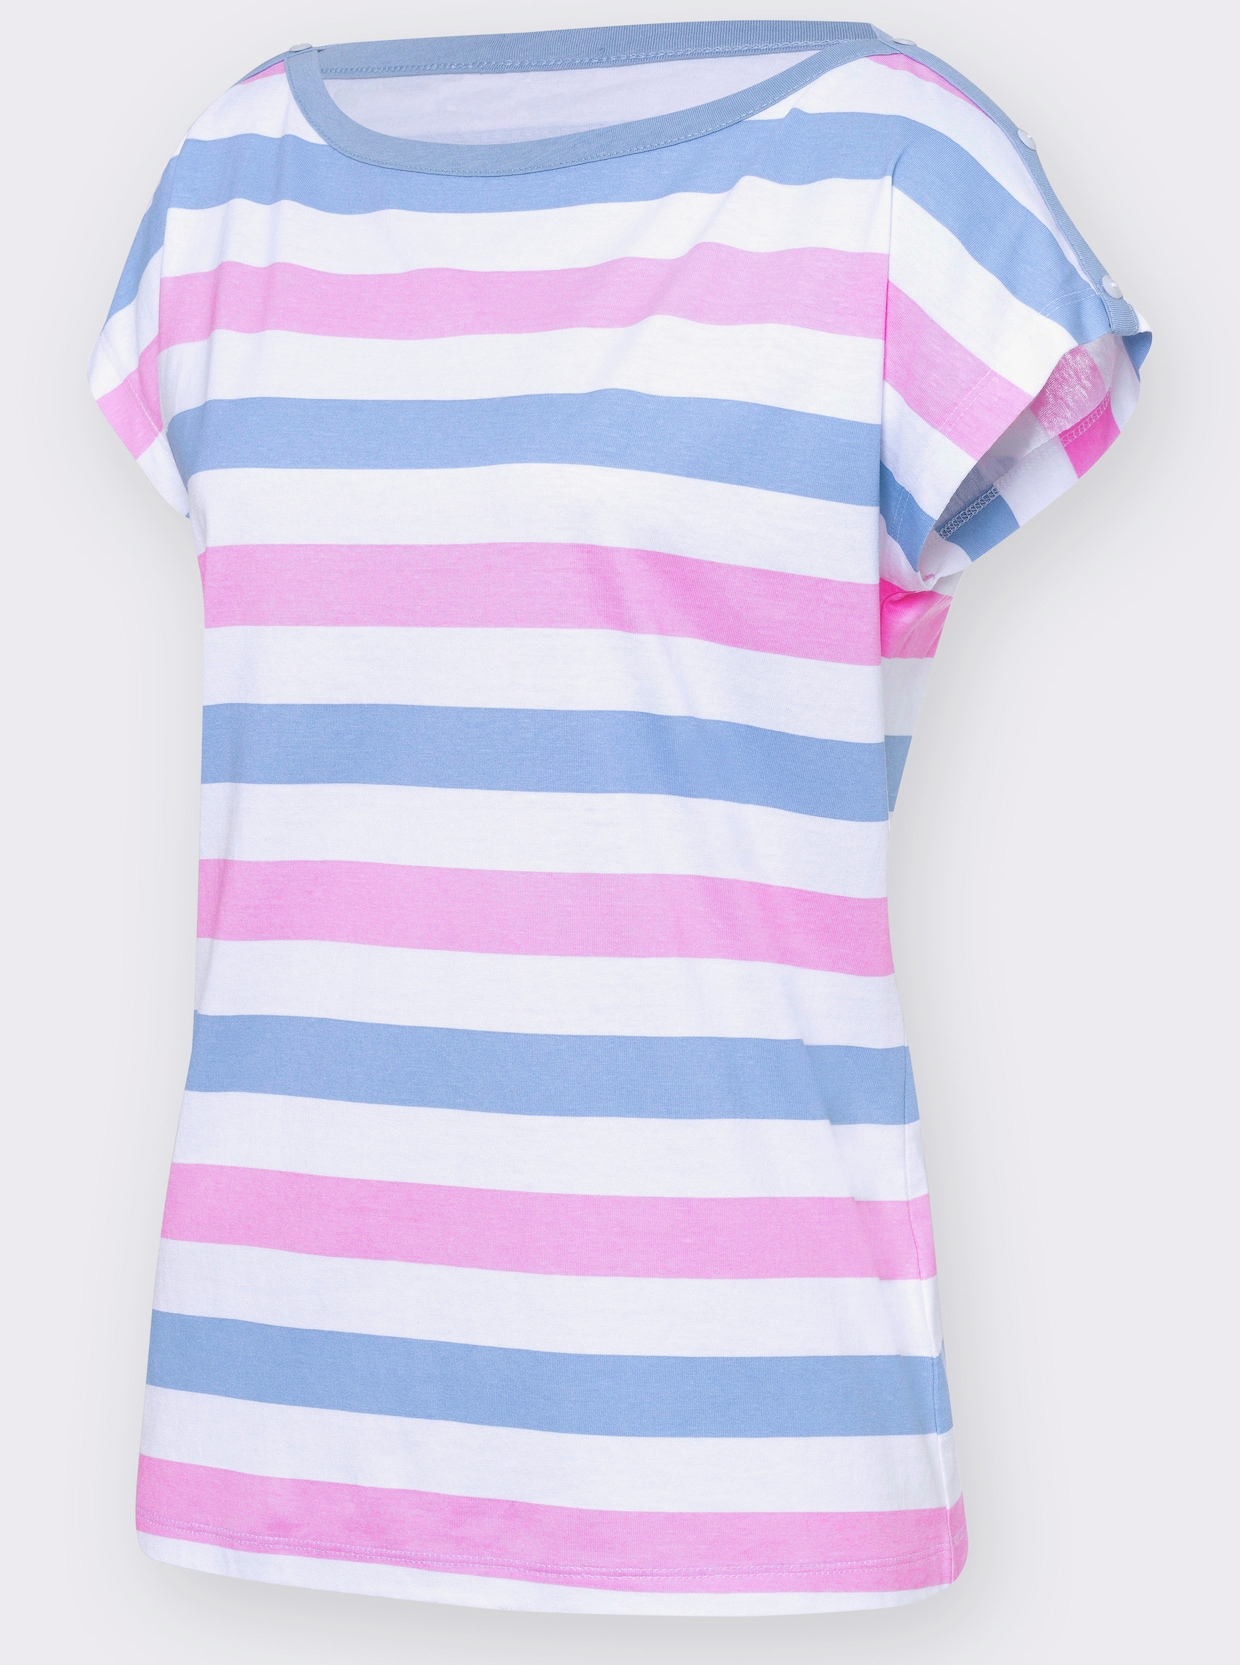 Proužkované tričko - růžová-modrá-proužek